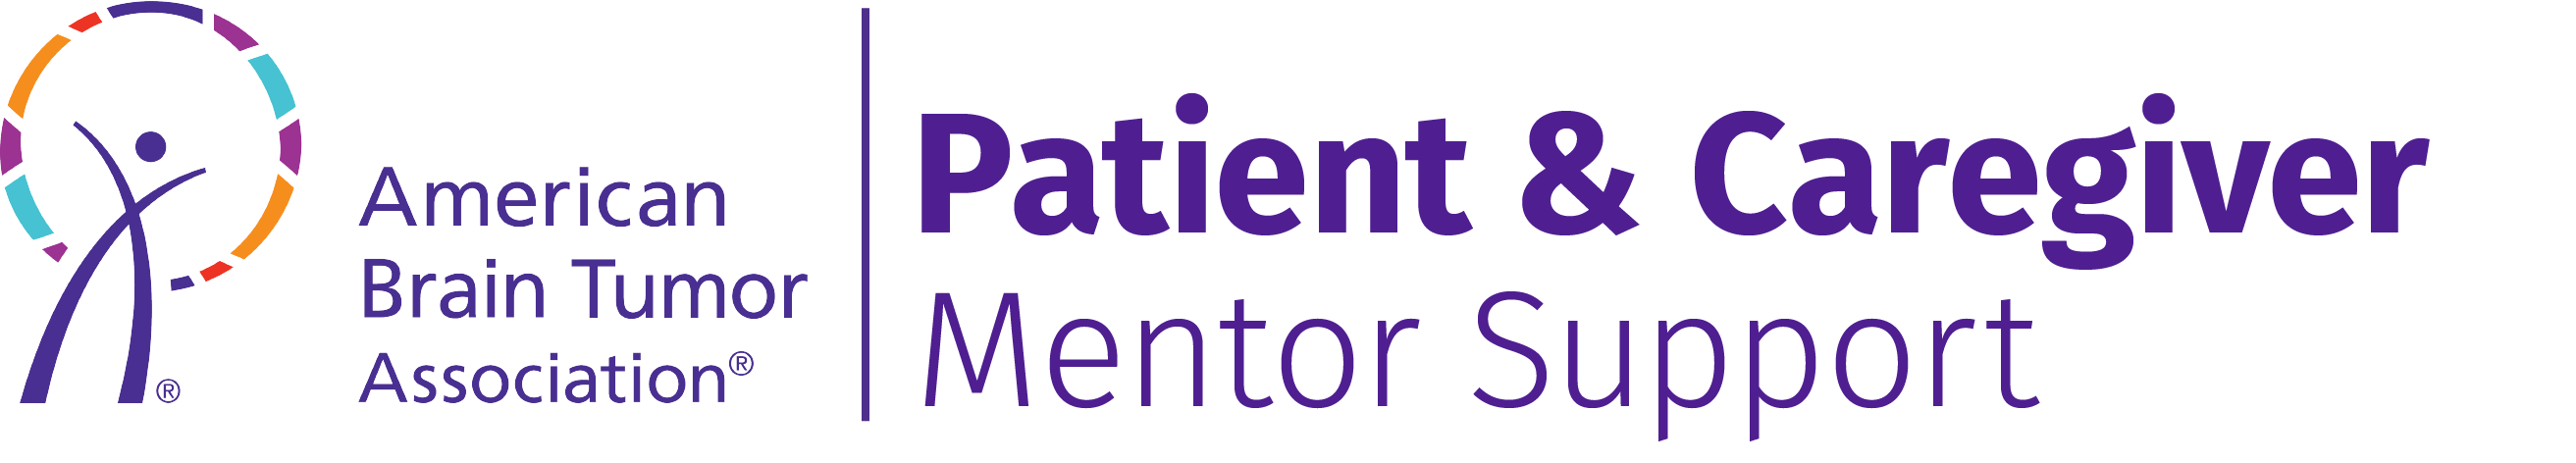 ABTA Patient and Caregiver Mentor Support Program